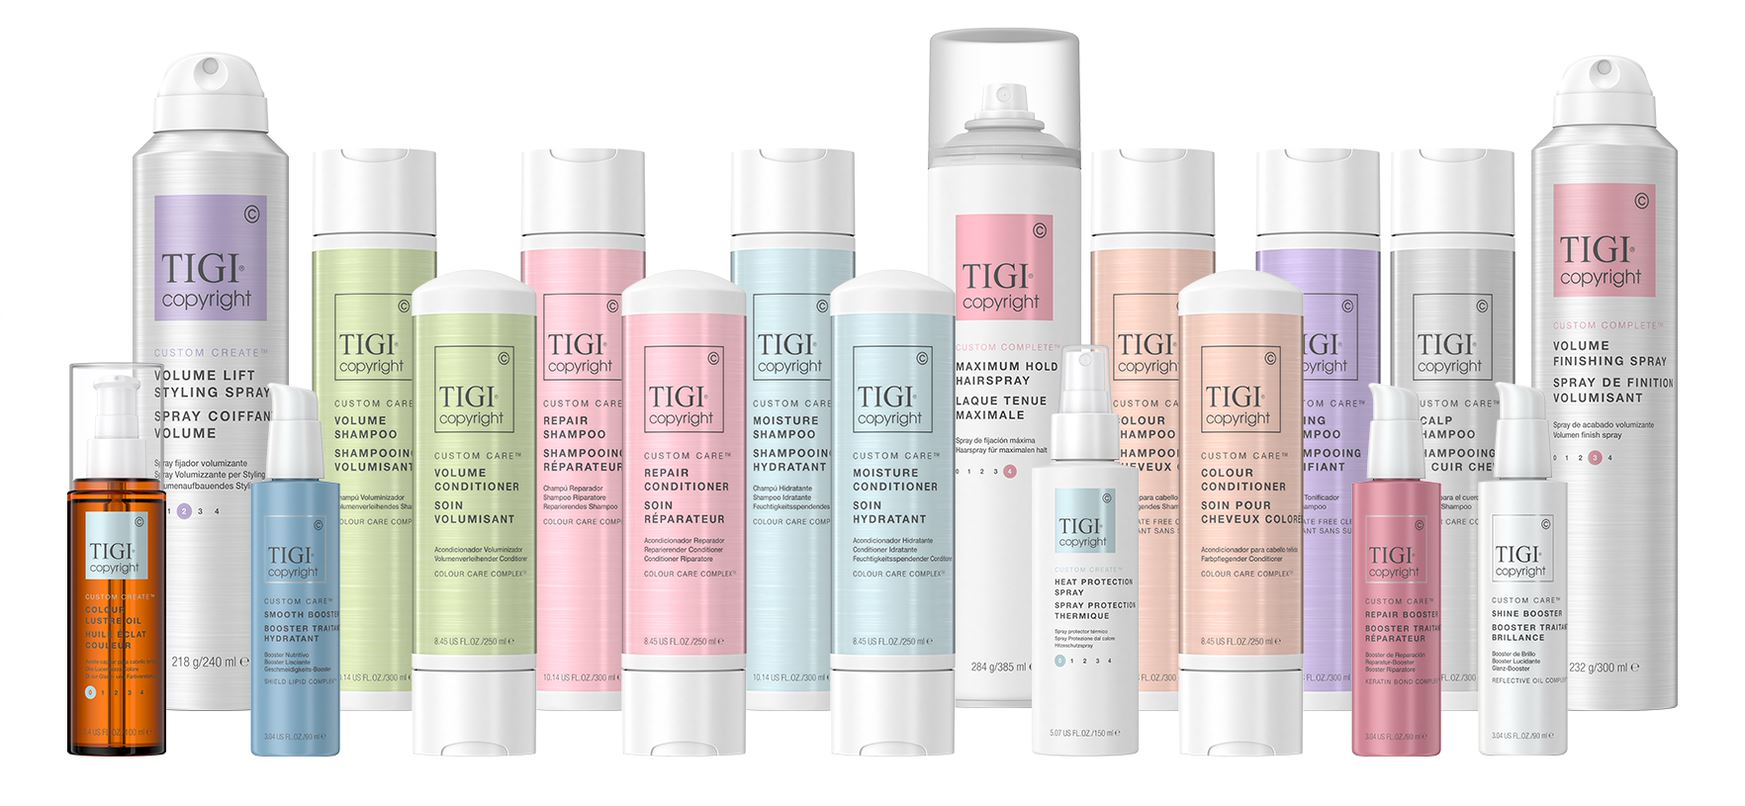 Free Sample of TIGI Copyright Hair Care.